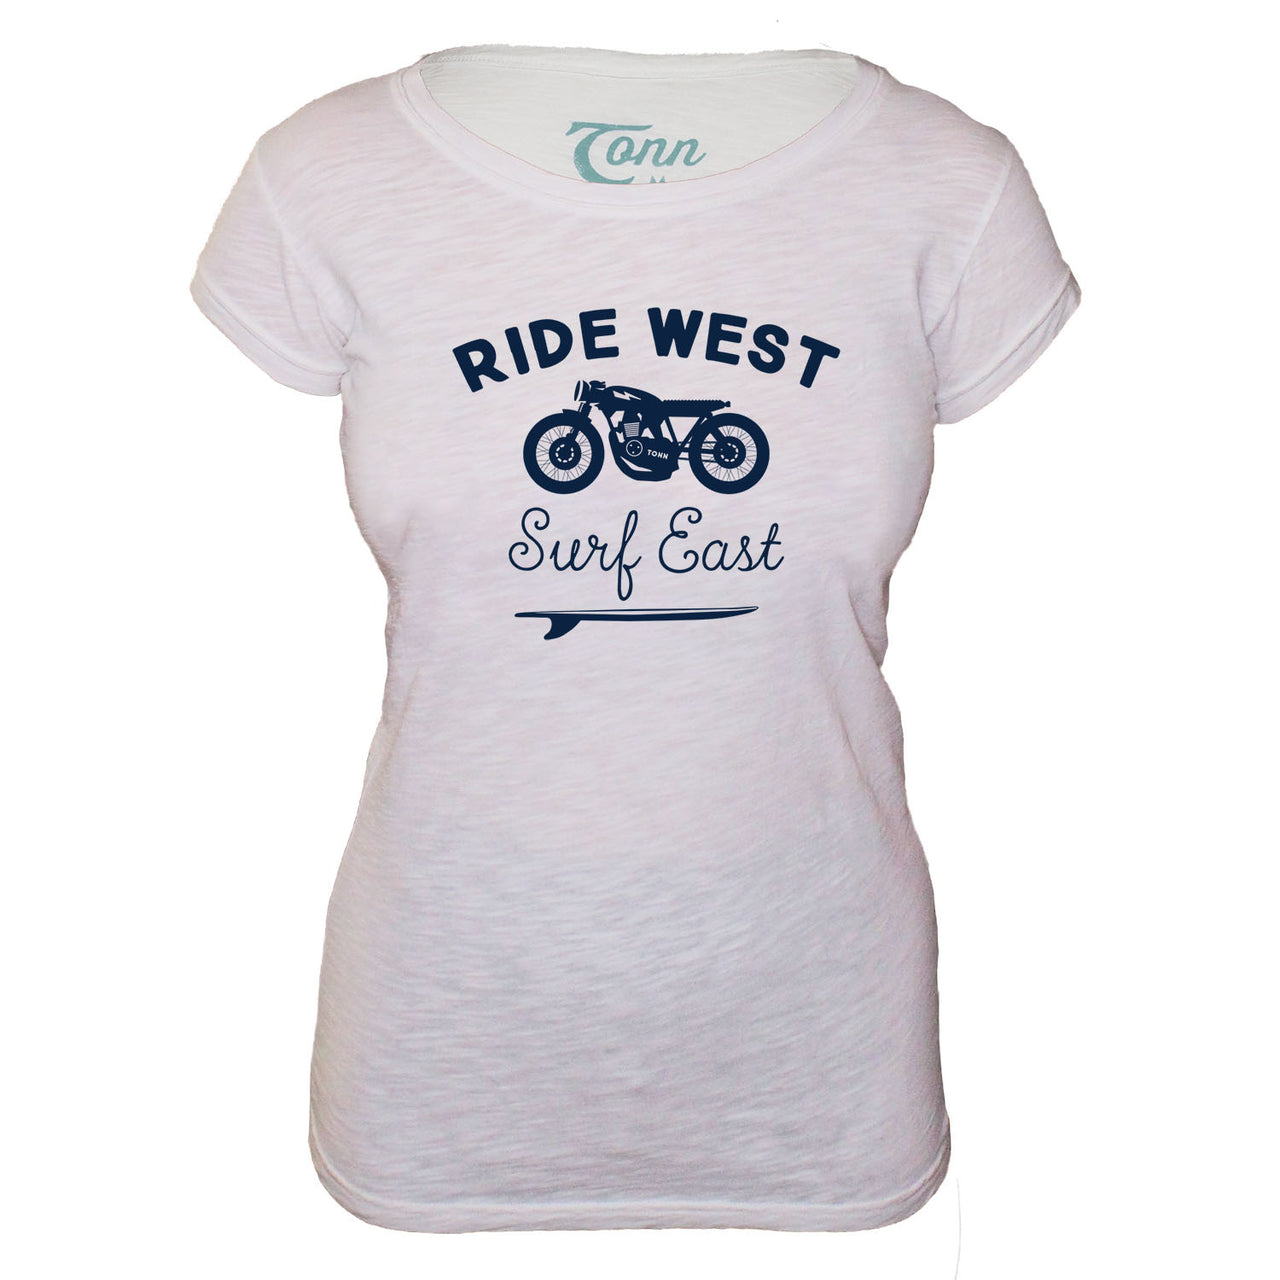 Ladies Ride west tee white